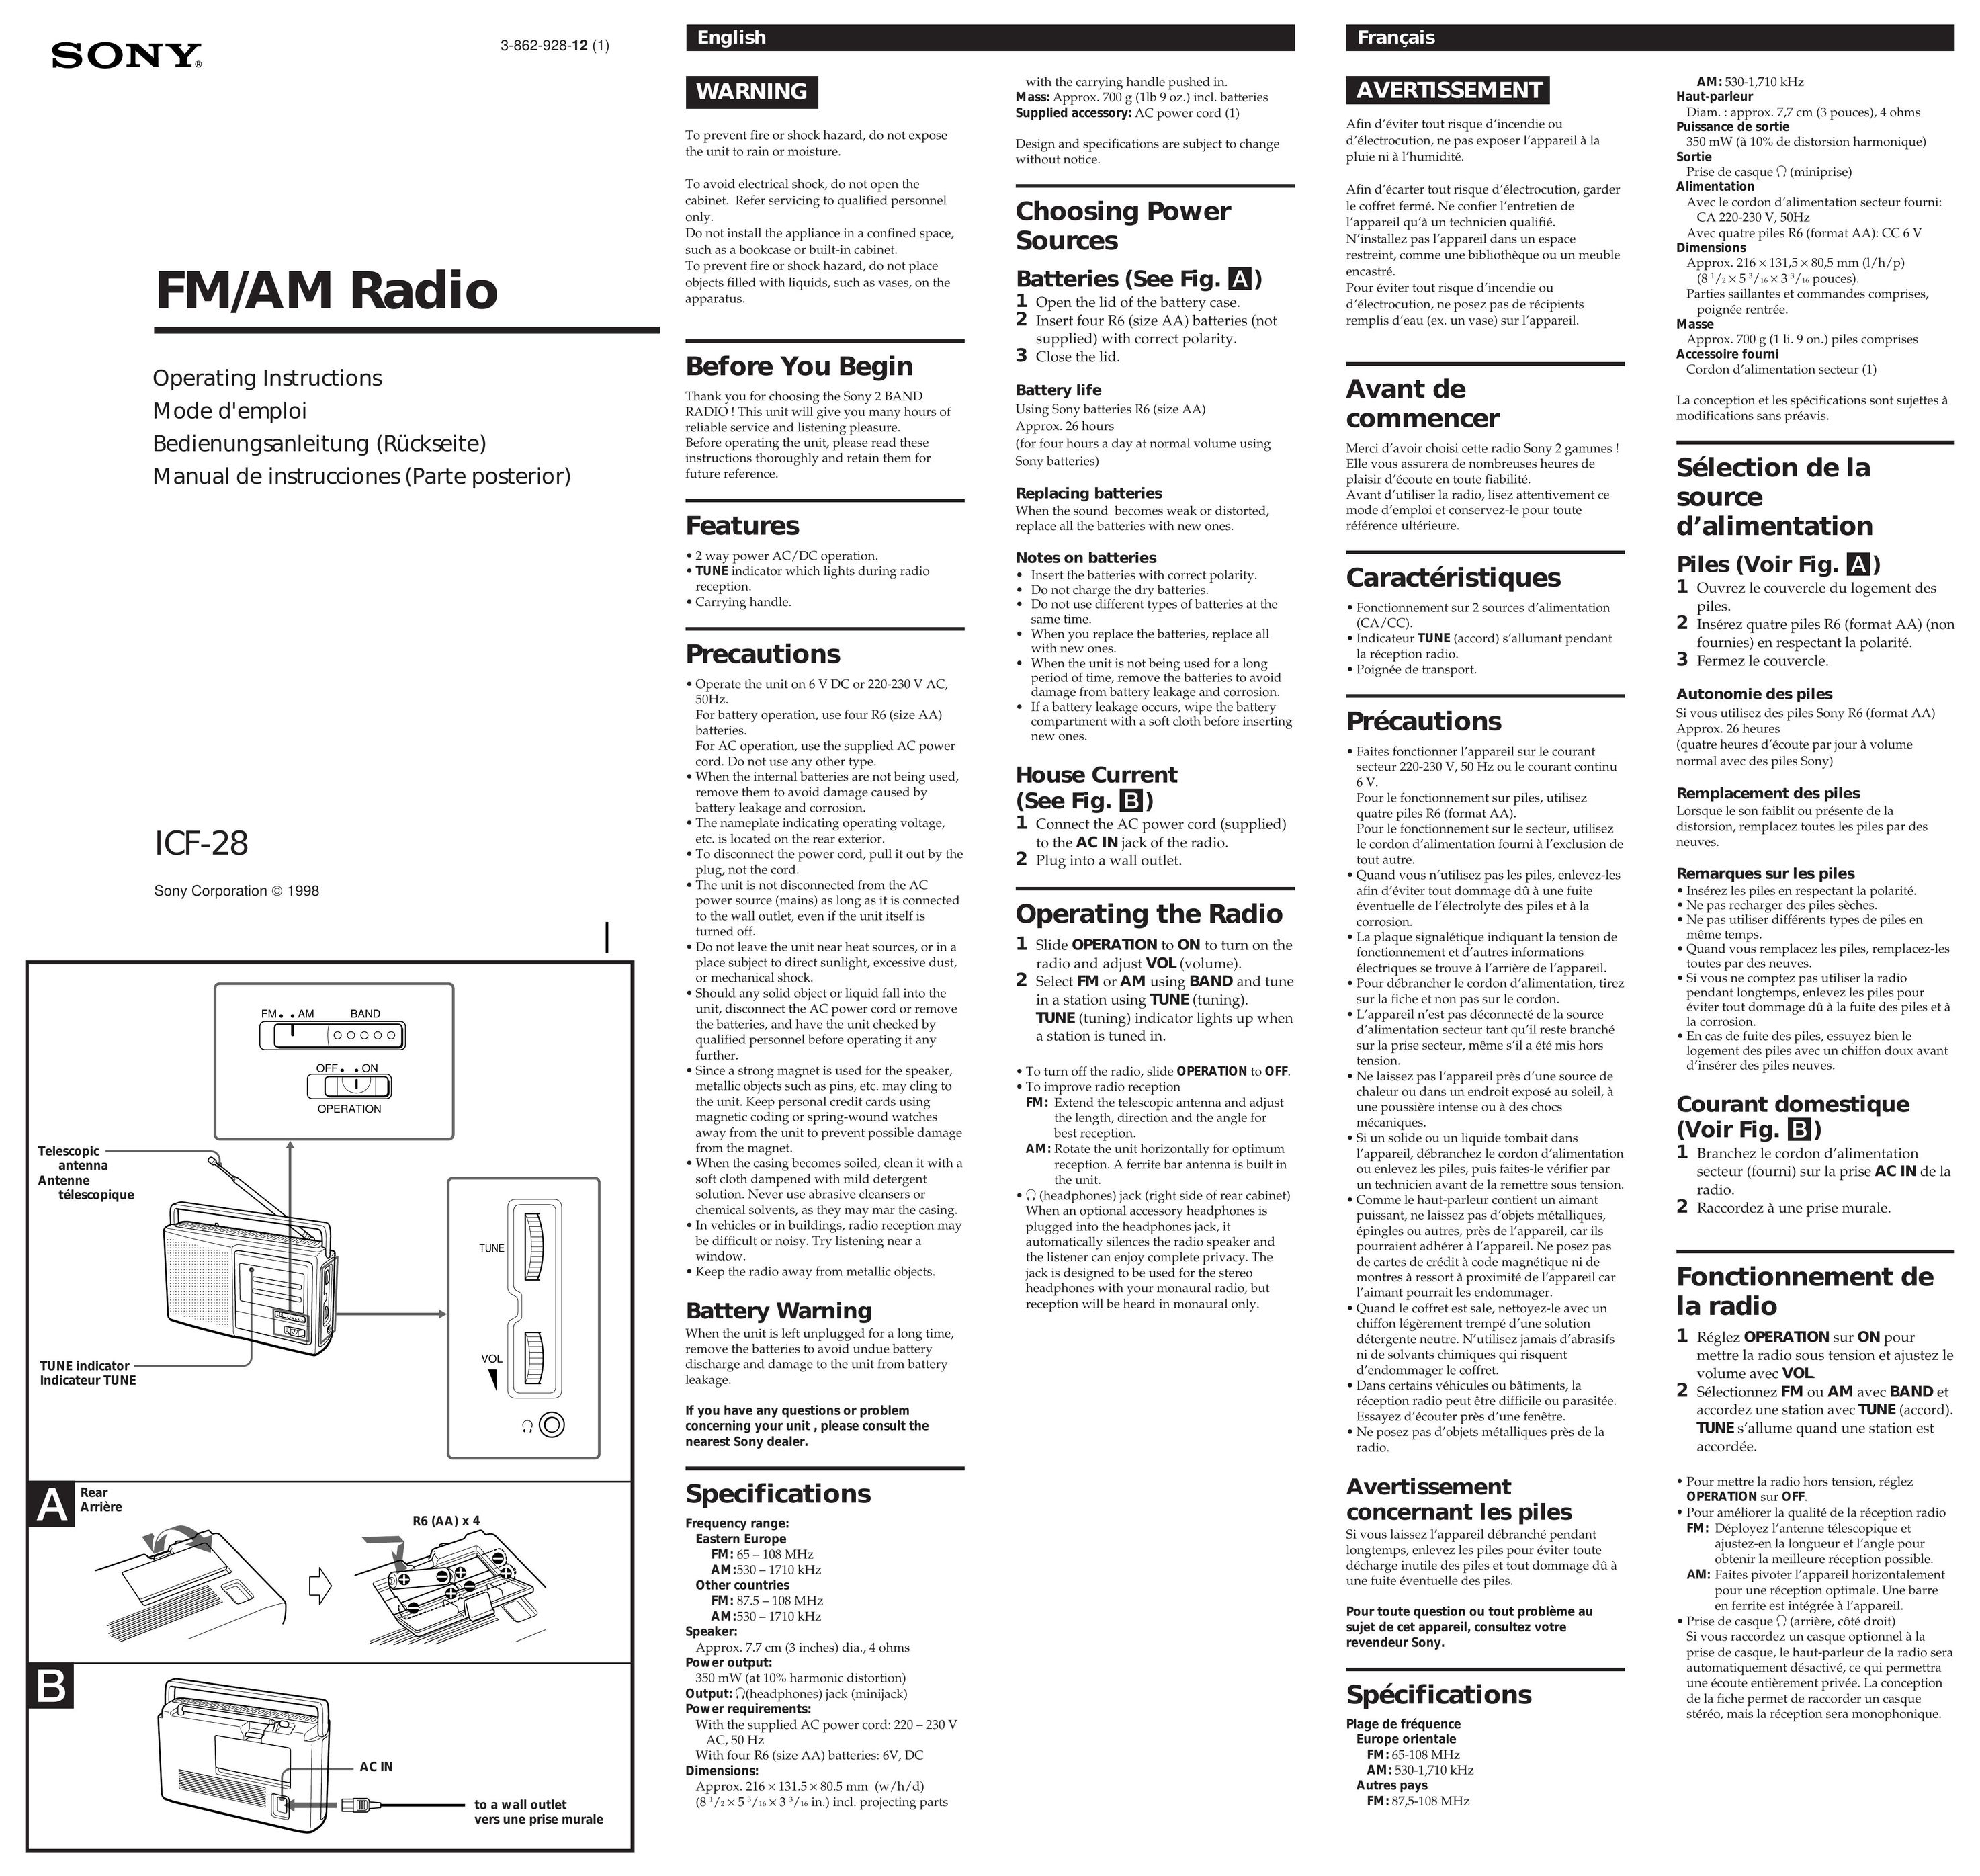 Sony ICF-28 Portable Radio User Manual